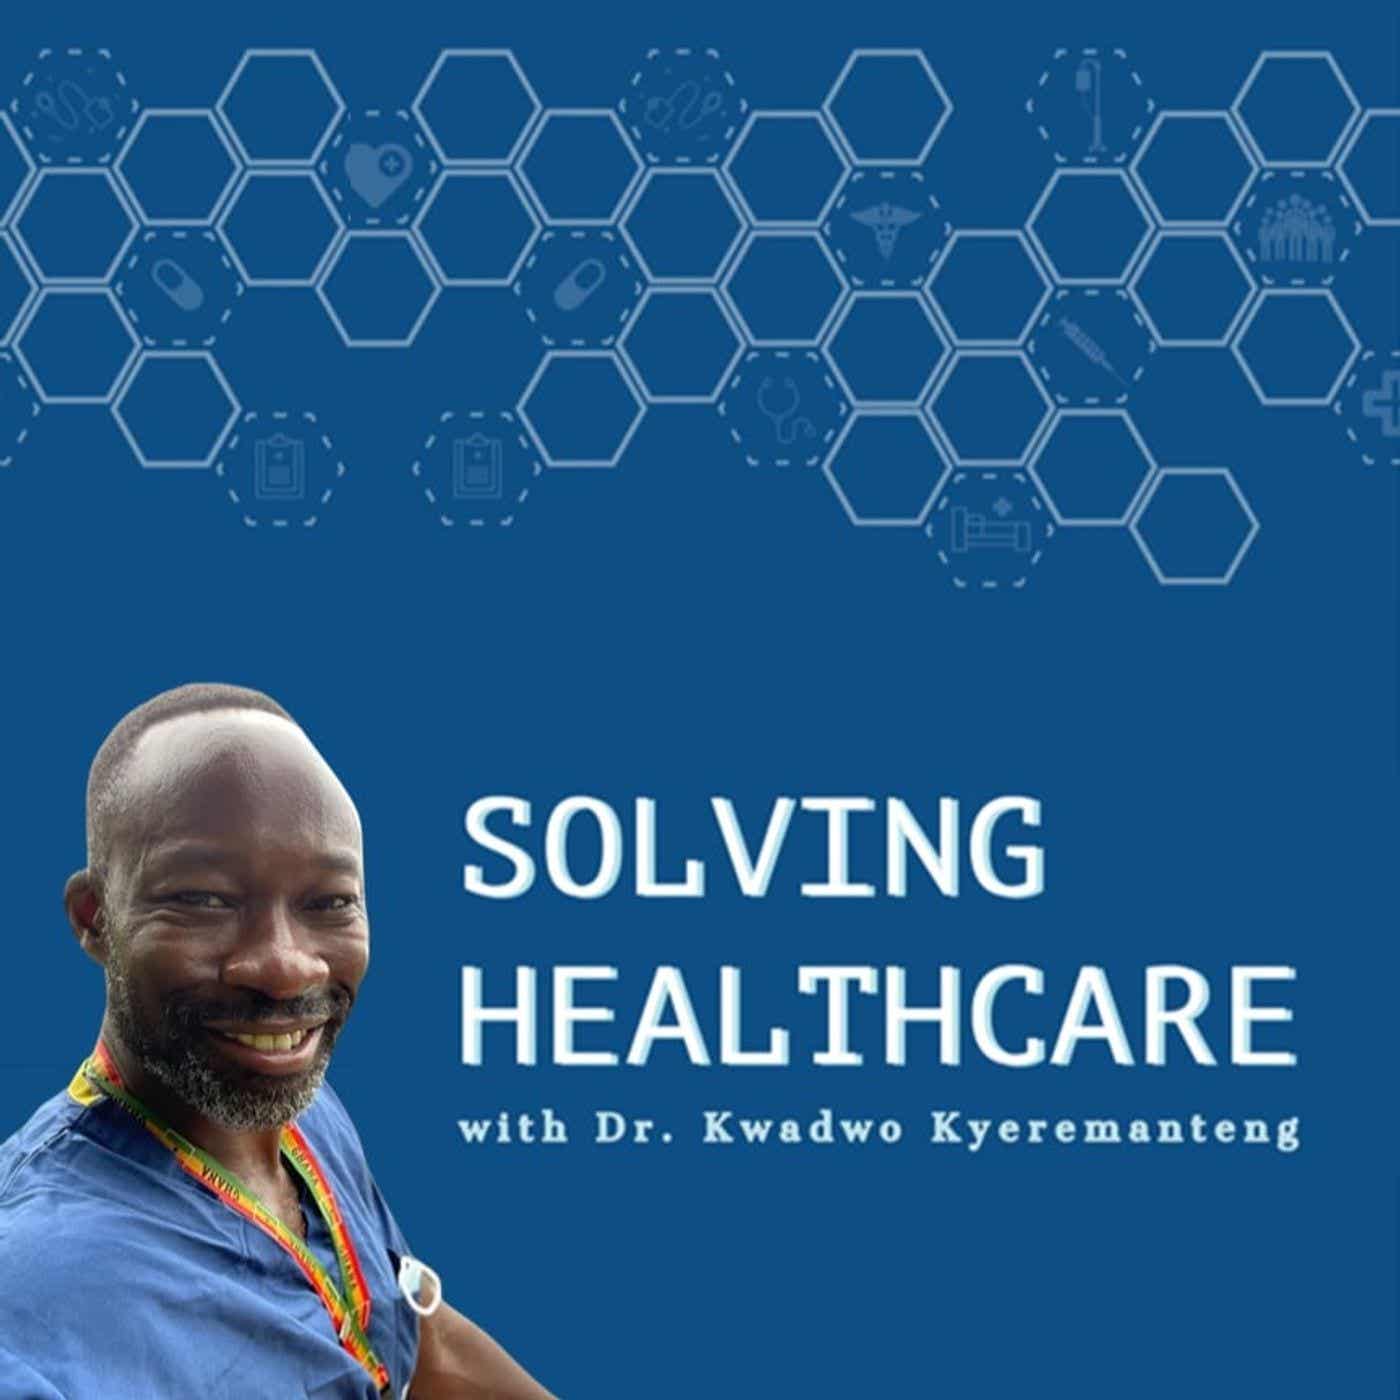 Solving Healthcare with Dr. Kwadwo Kyeremanteng:Dr. Kwadwo Kyeremanteng